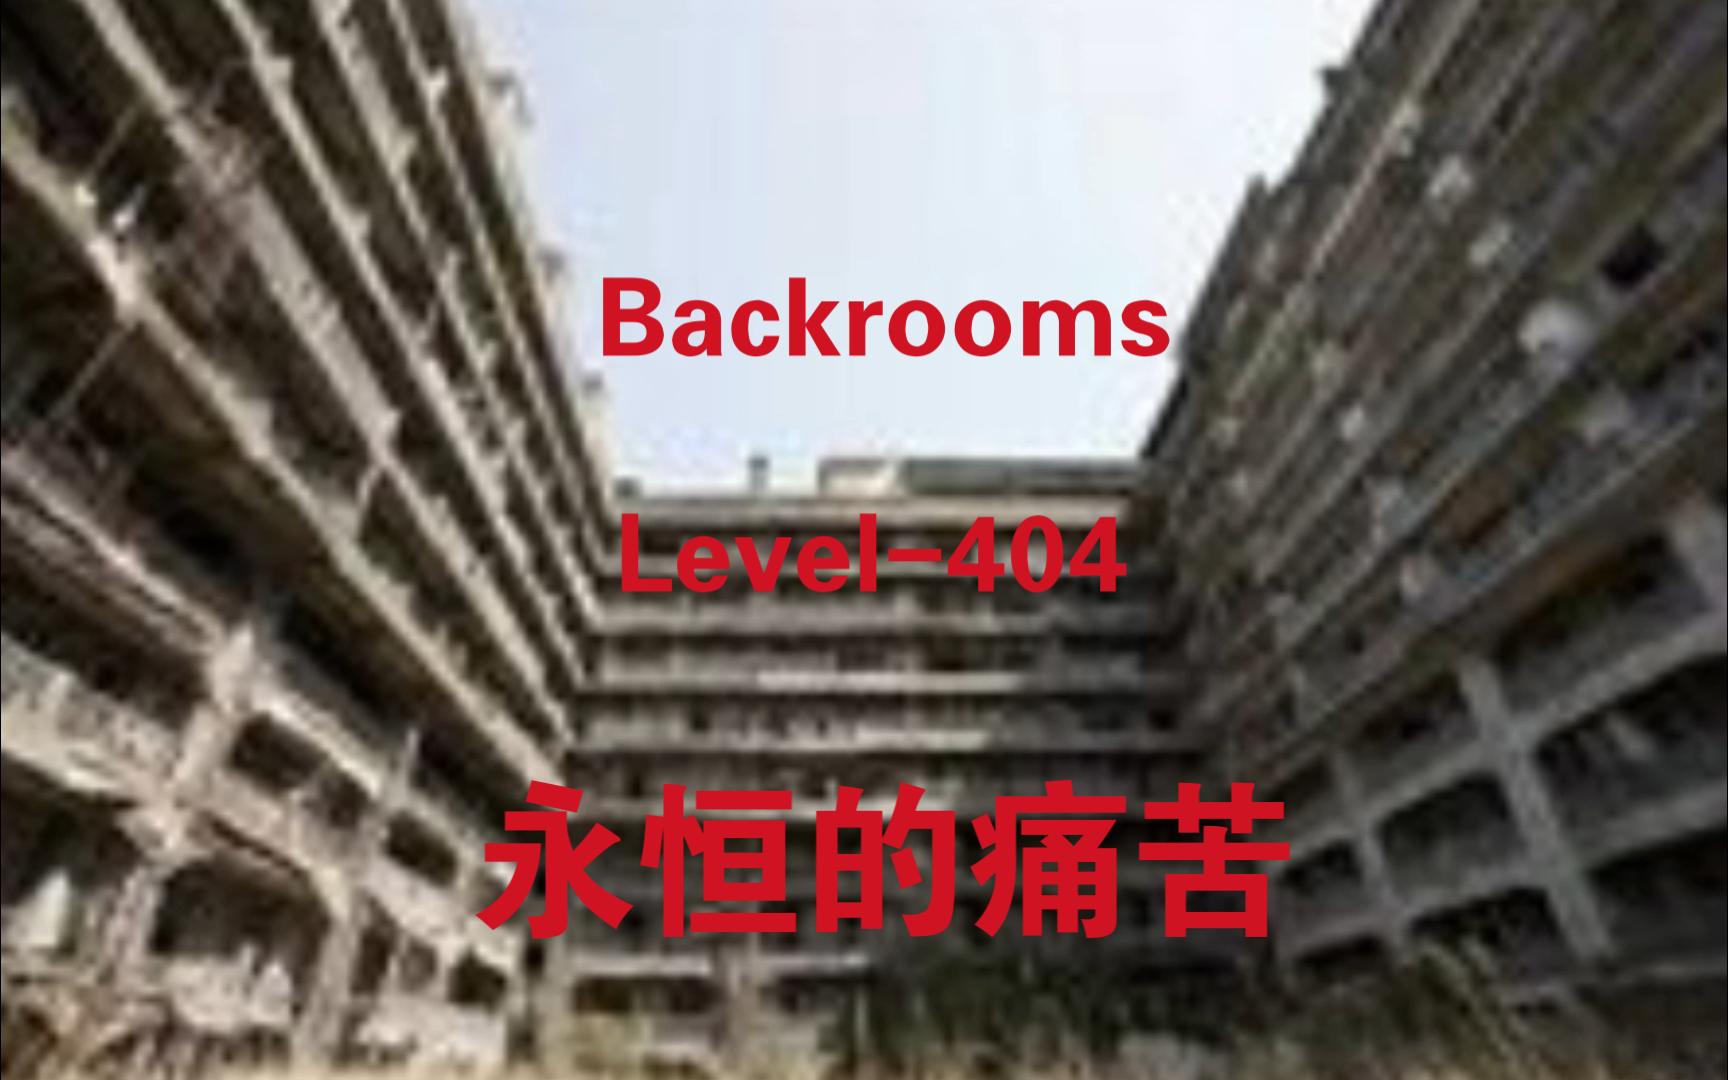 backrooms level -100 / 404 / -999,999 